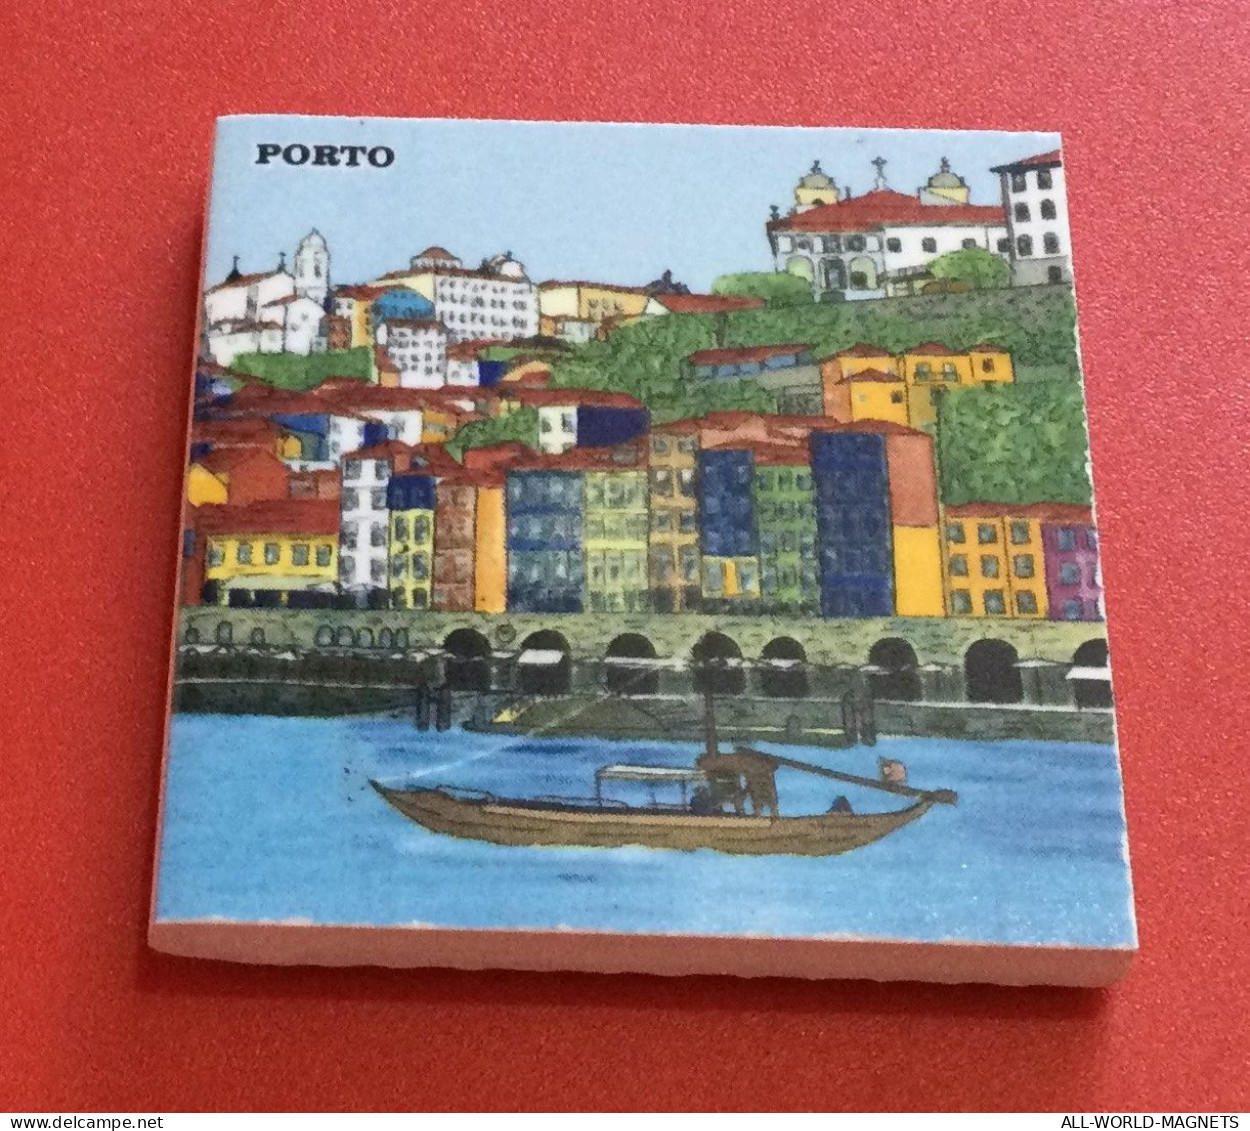 Porto Duoro River Boat Porto City Vew Portugal Souvenir Fridge Magnet - Tourism